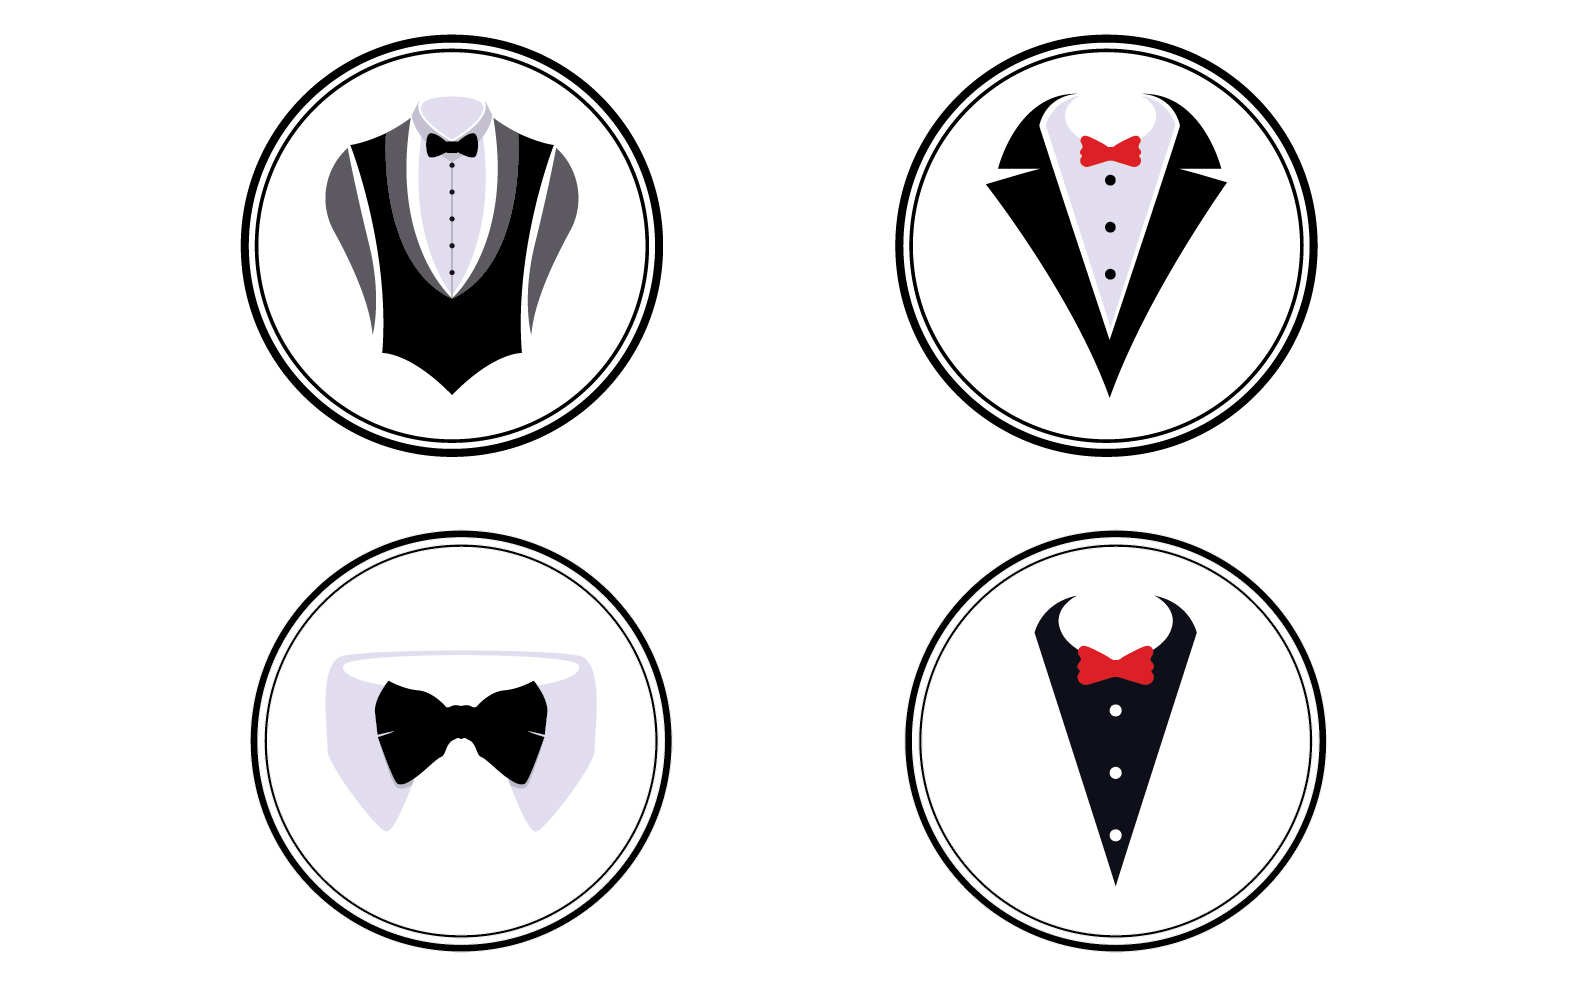 Maid suit logo and symbol vector design v20